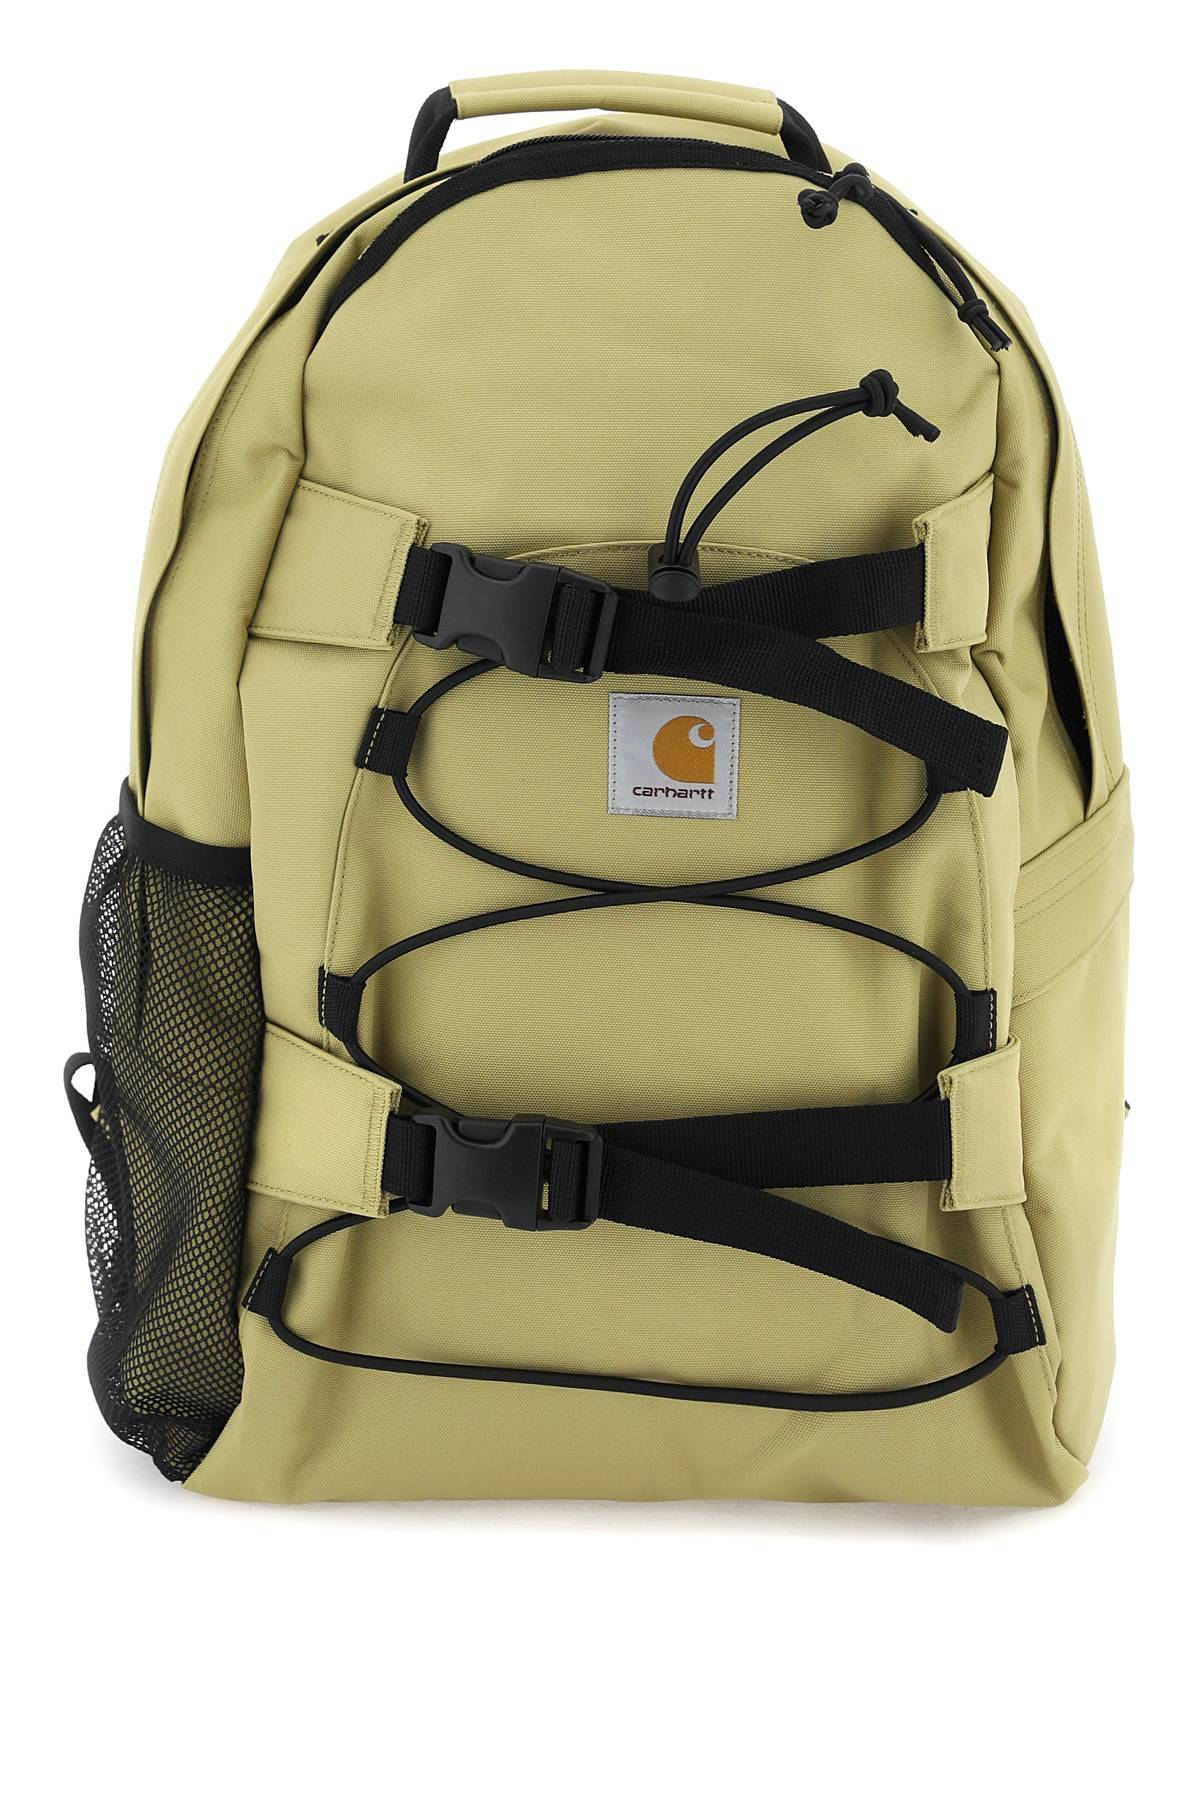 Carhartt WIP CARHARTT WIP kickflip backpack in recycled fabric